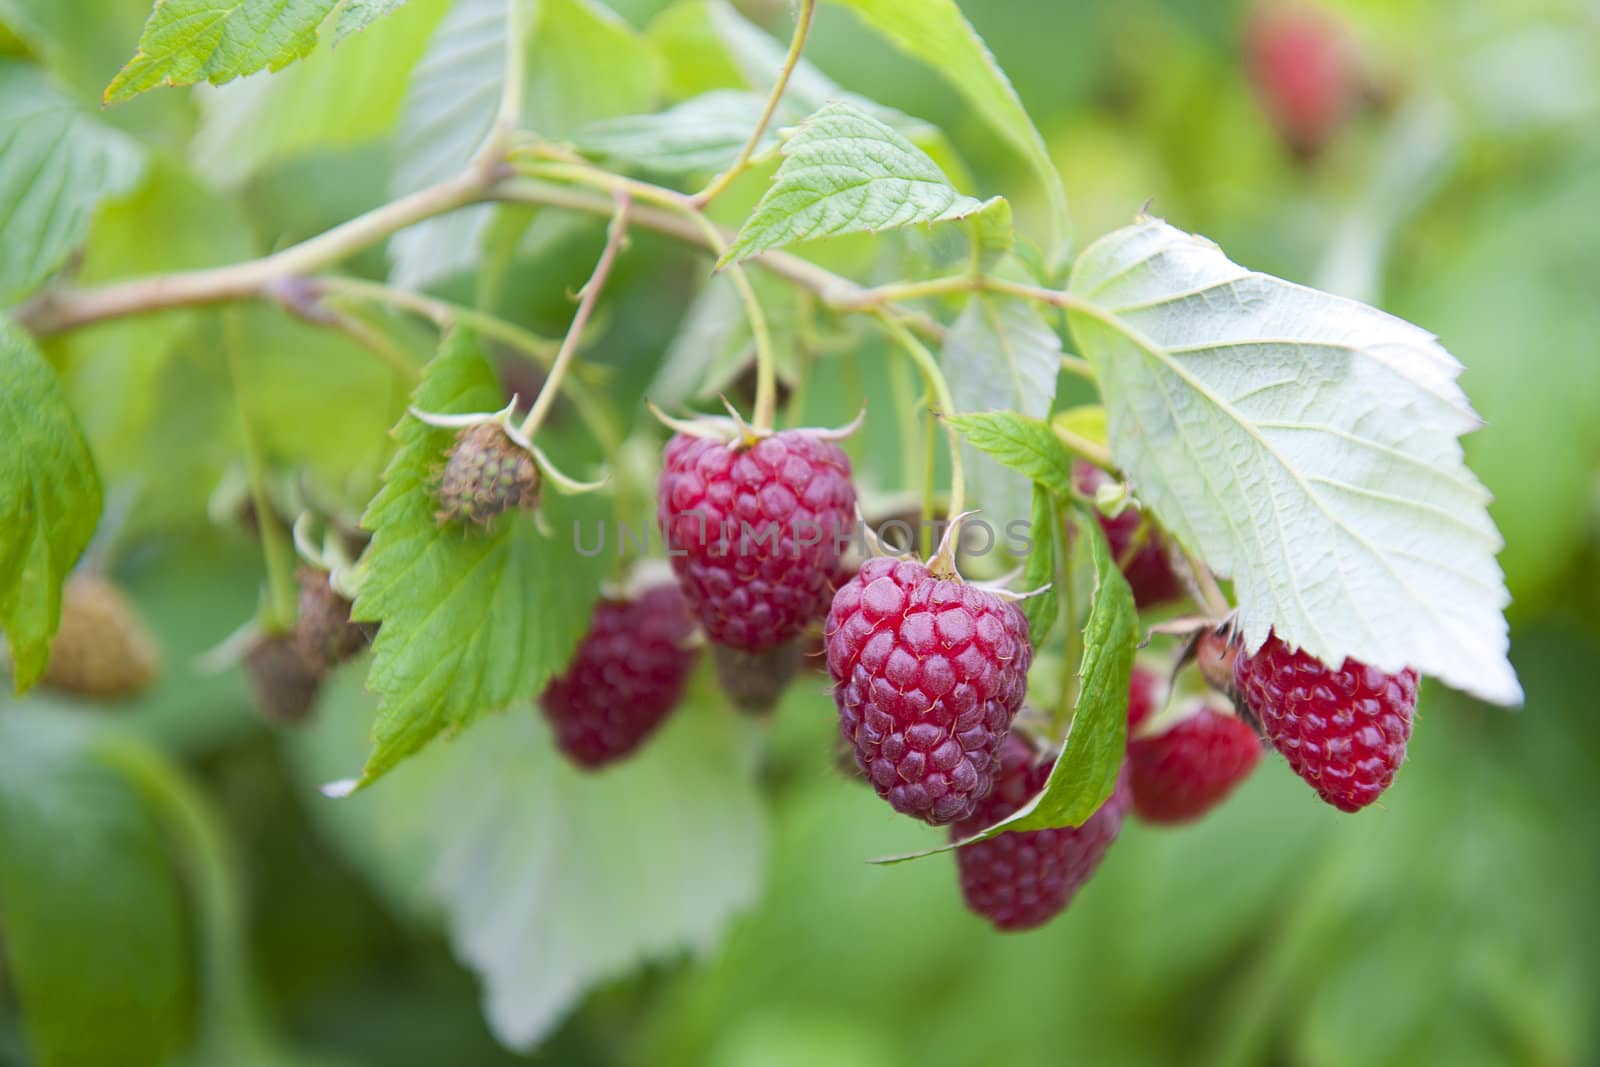 Sweet raspberries by Yaurinko